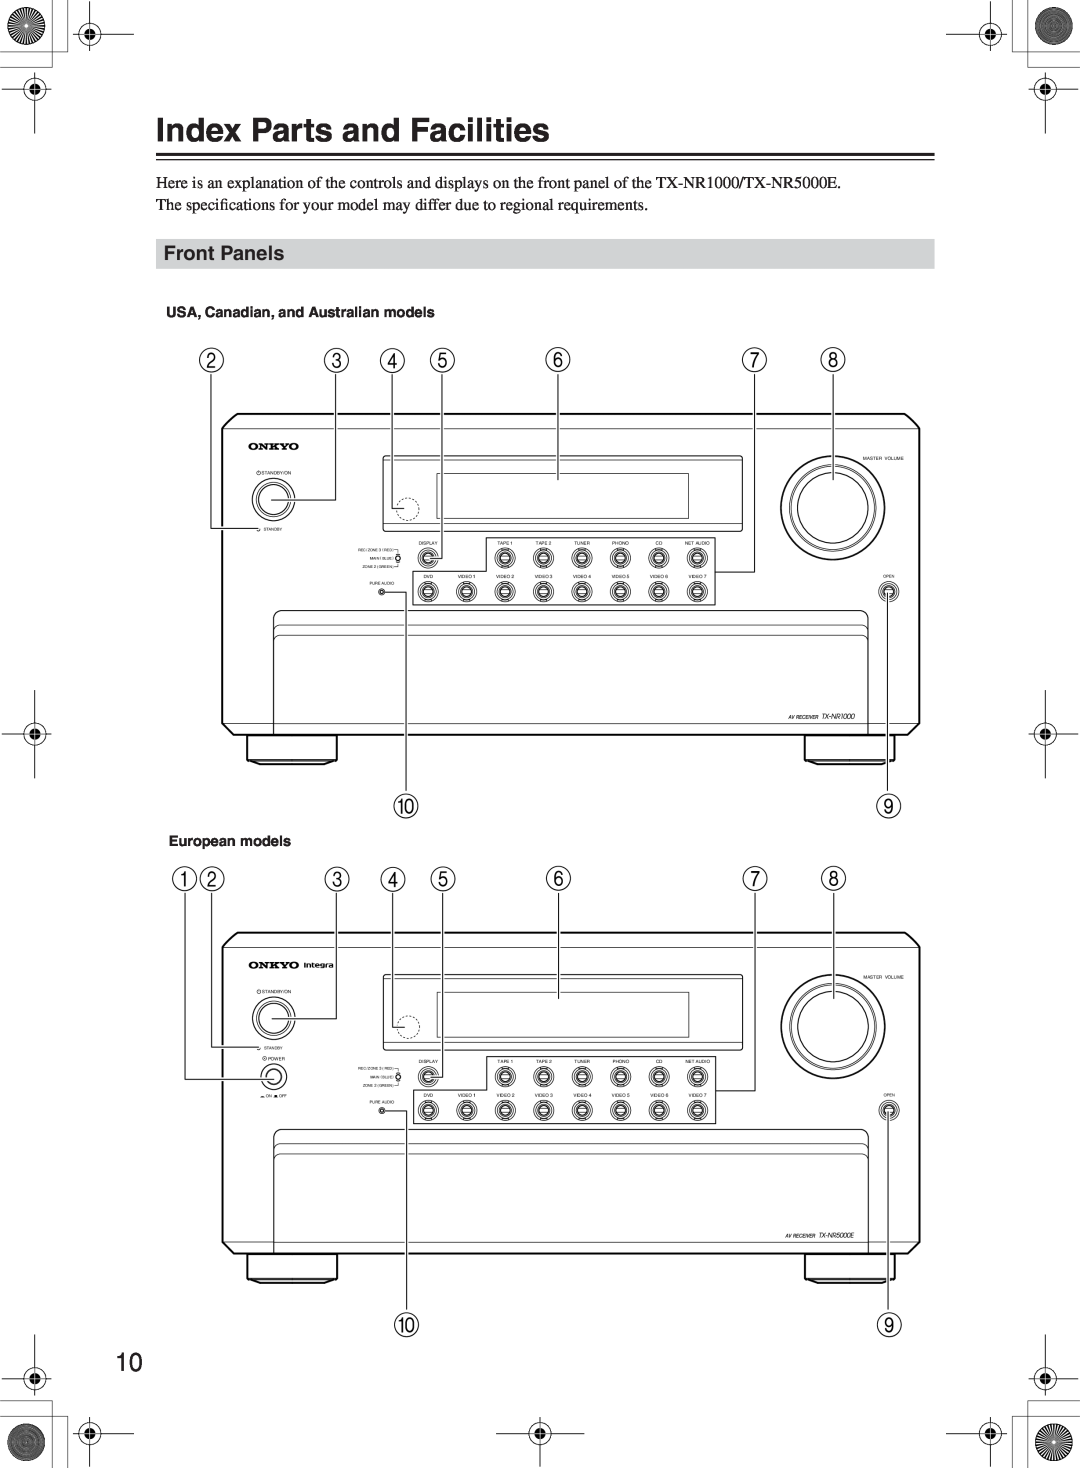 Onkyo TX-NR1000 instruction manual Index Parts and Facilities, Front Panels 